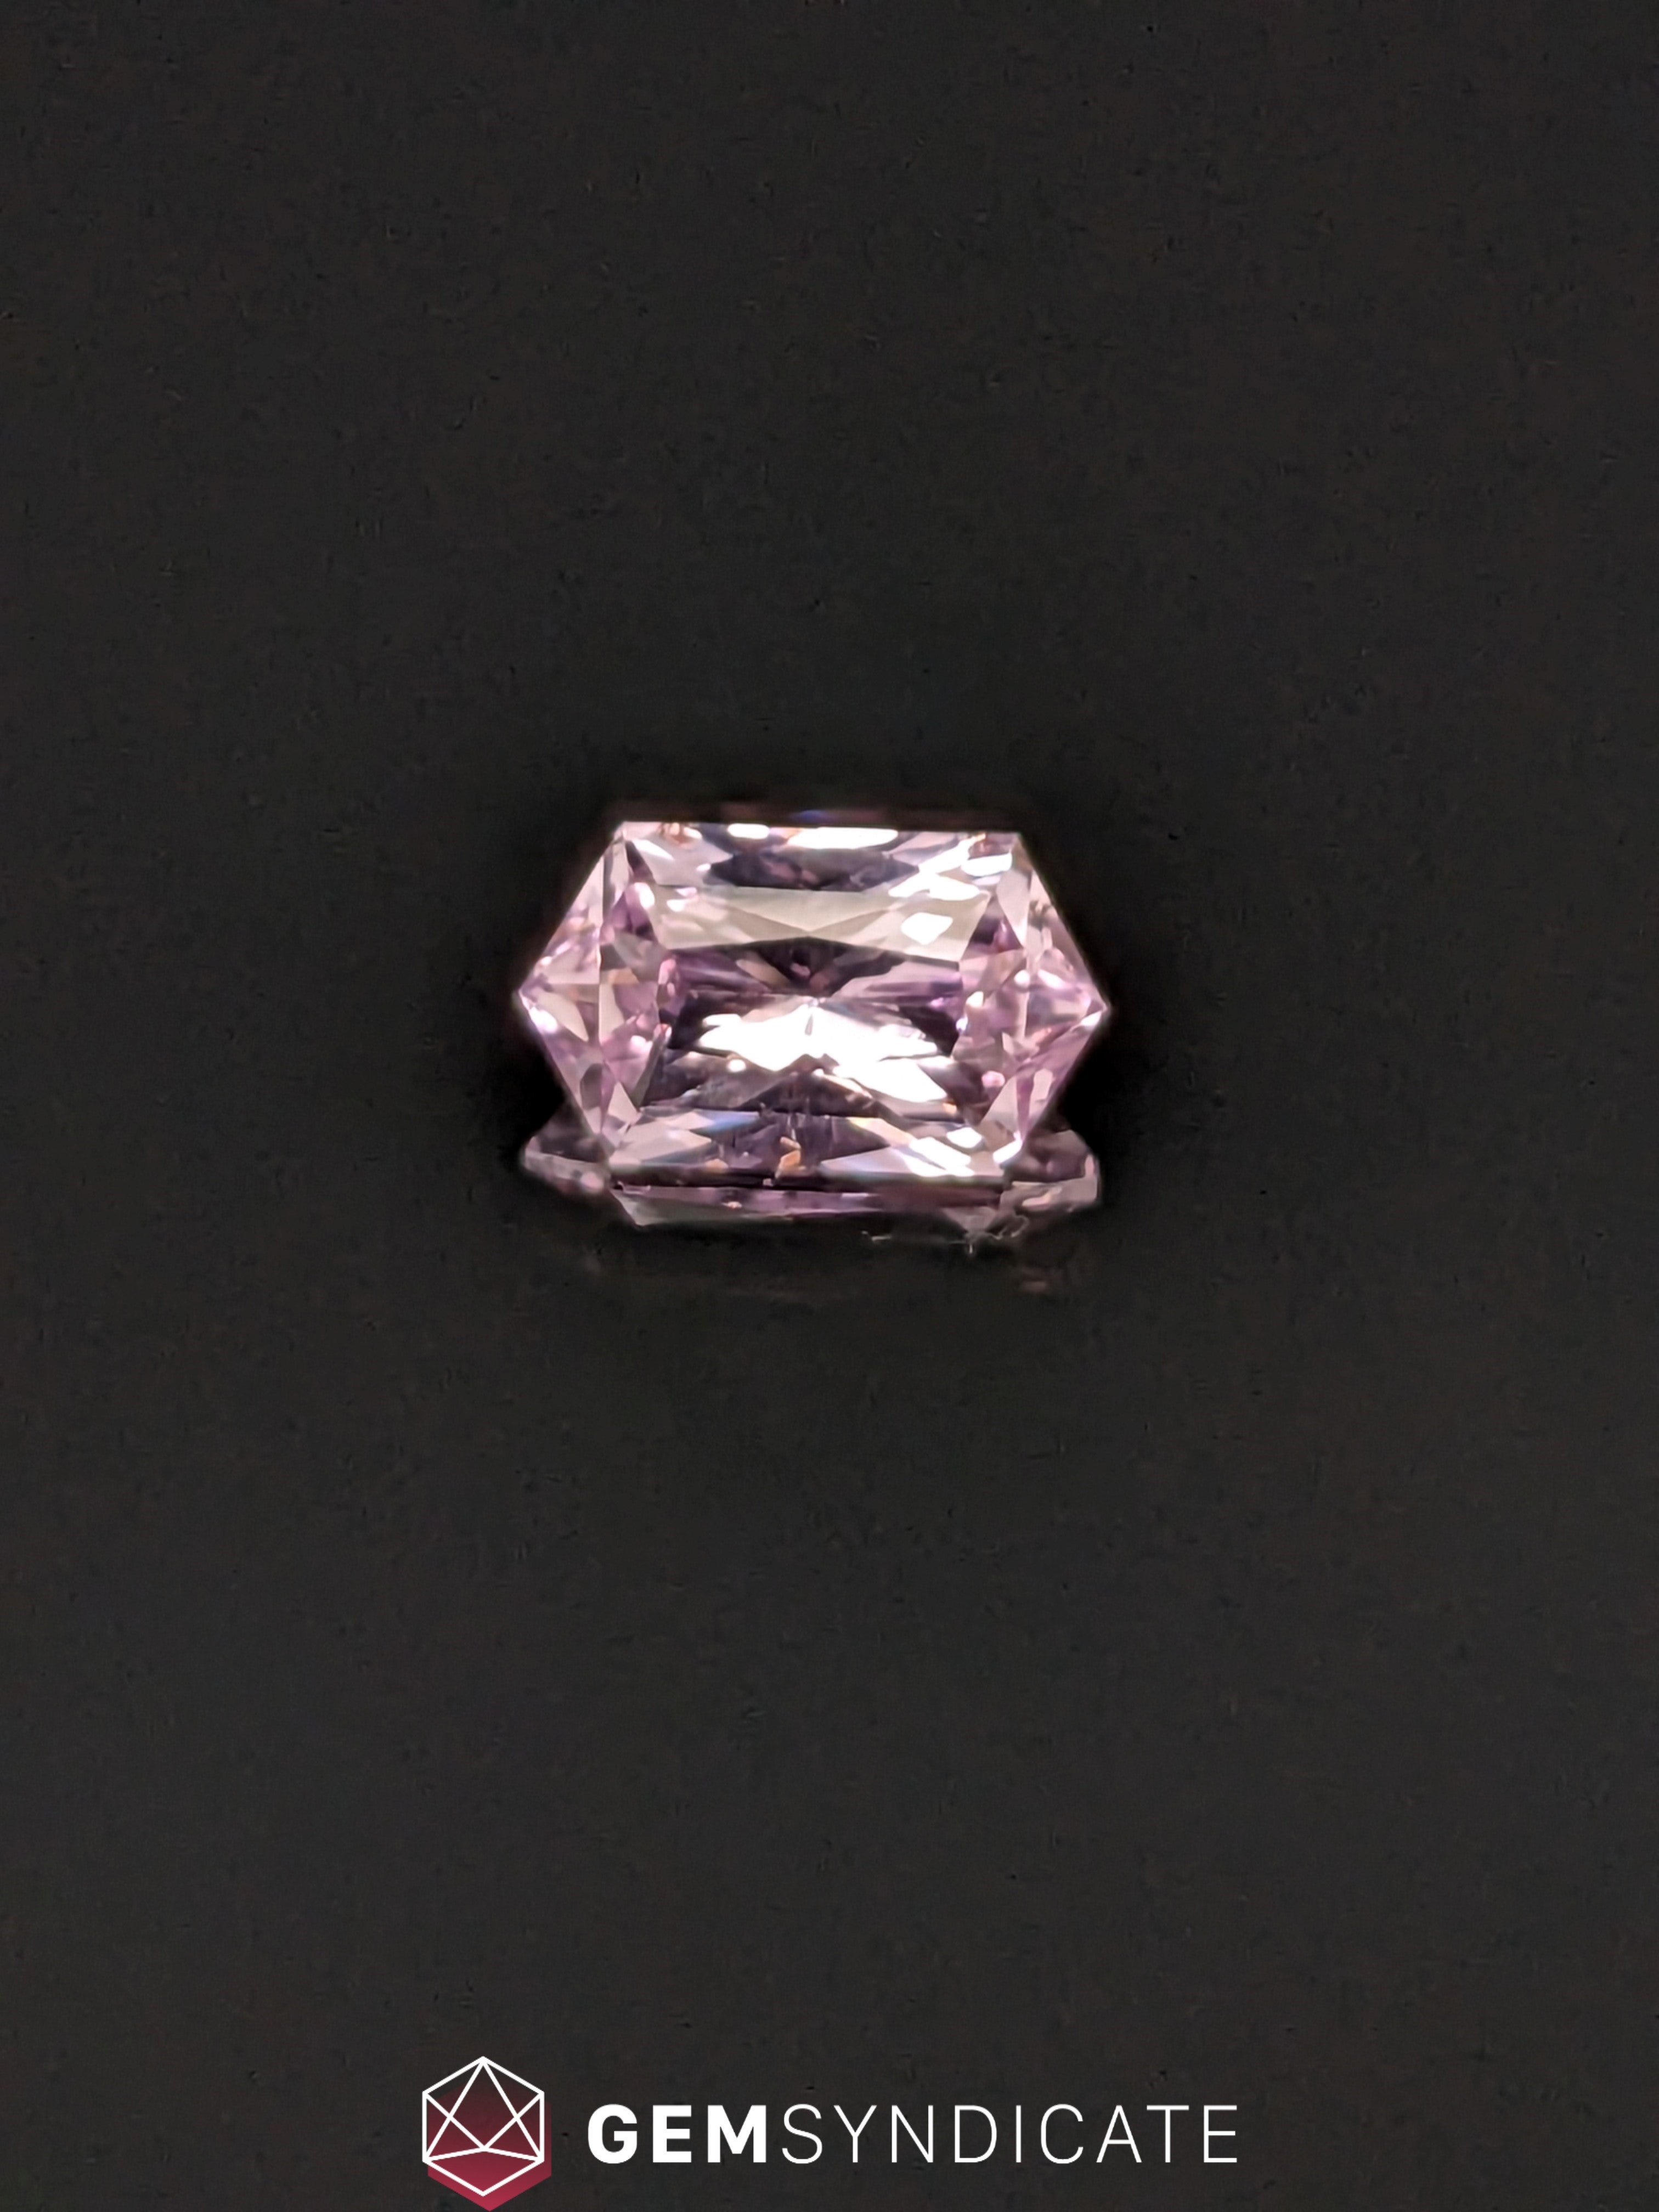 Gorgeous Elongated Hexagon Pink Sapphire 2.02ct